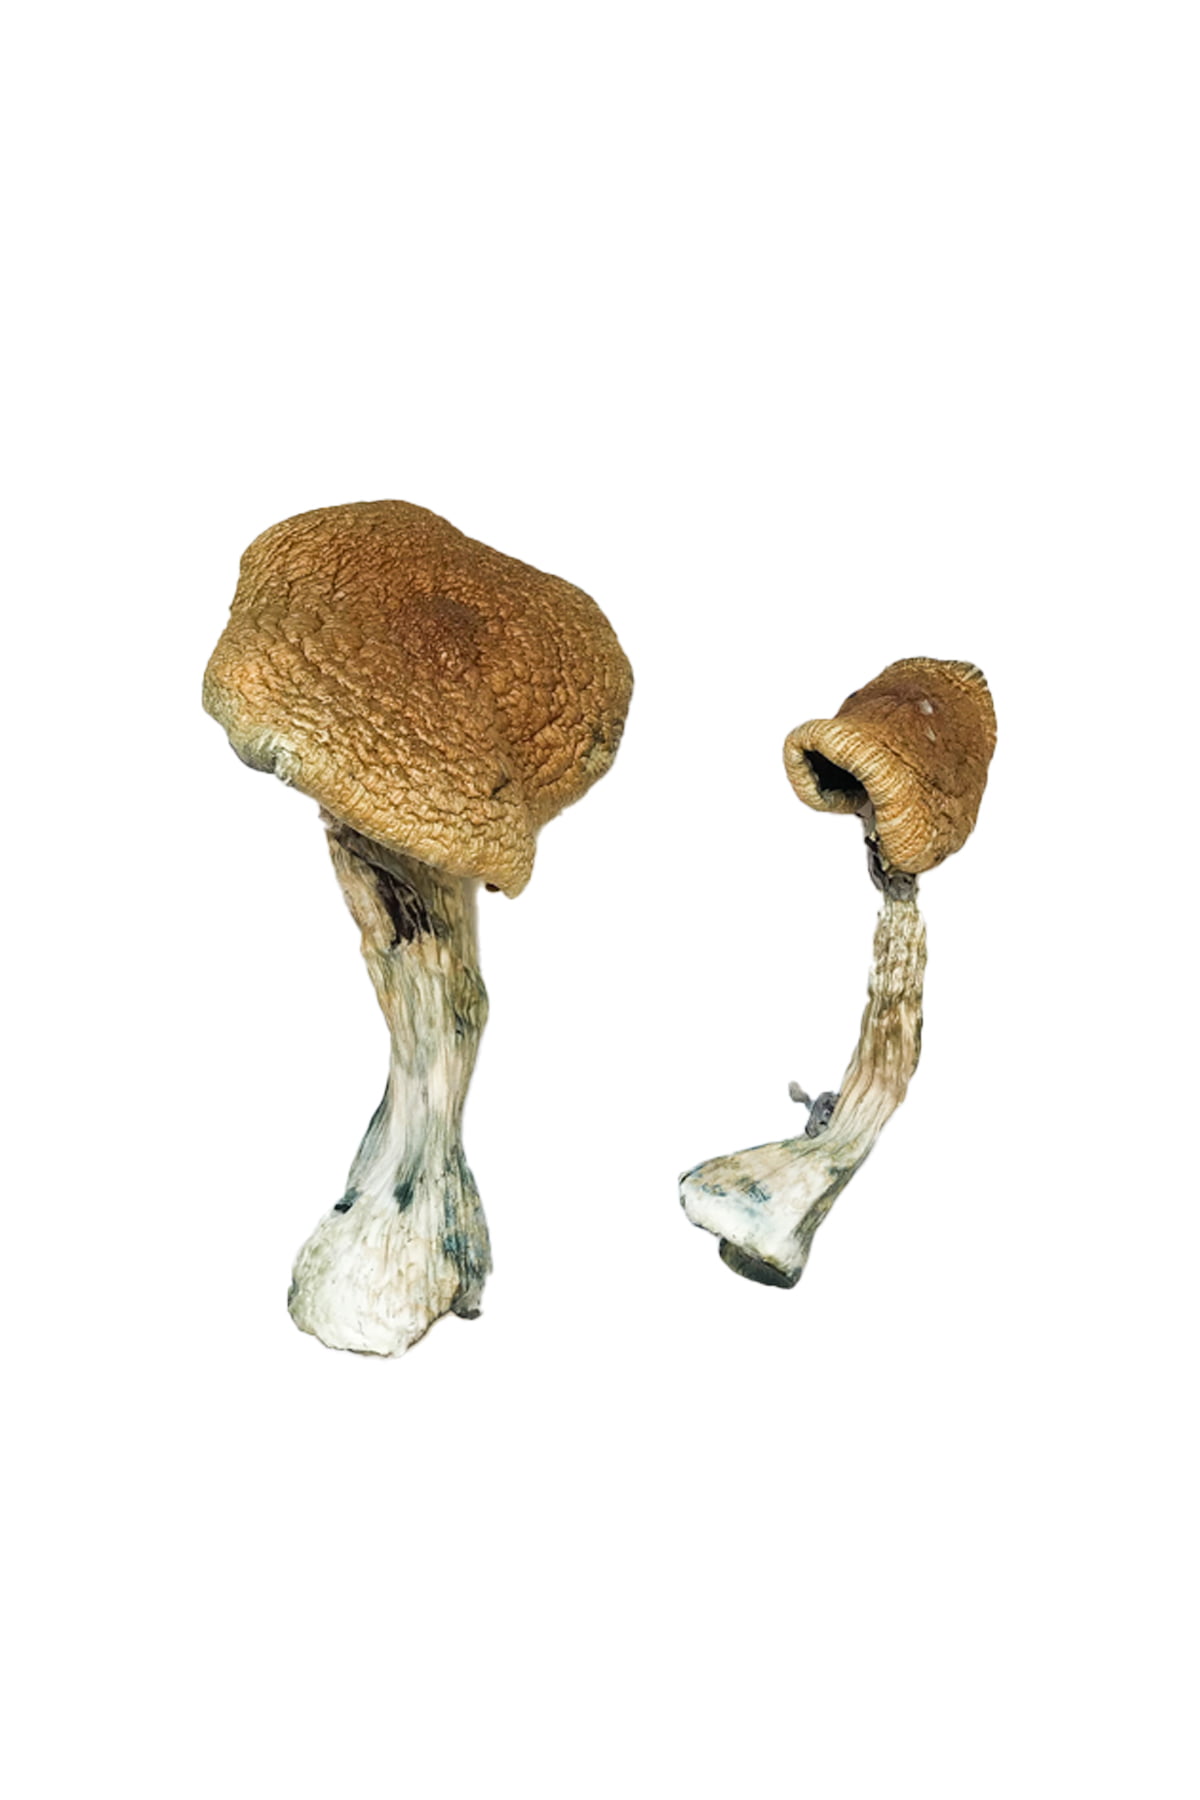 Buy Texas Yellow Cap Magic Mushrooms online